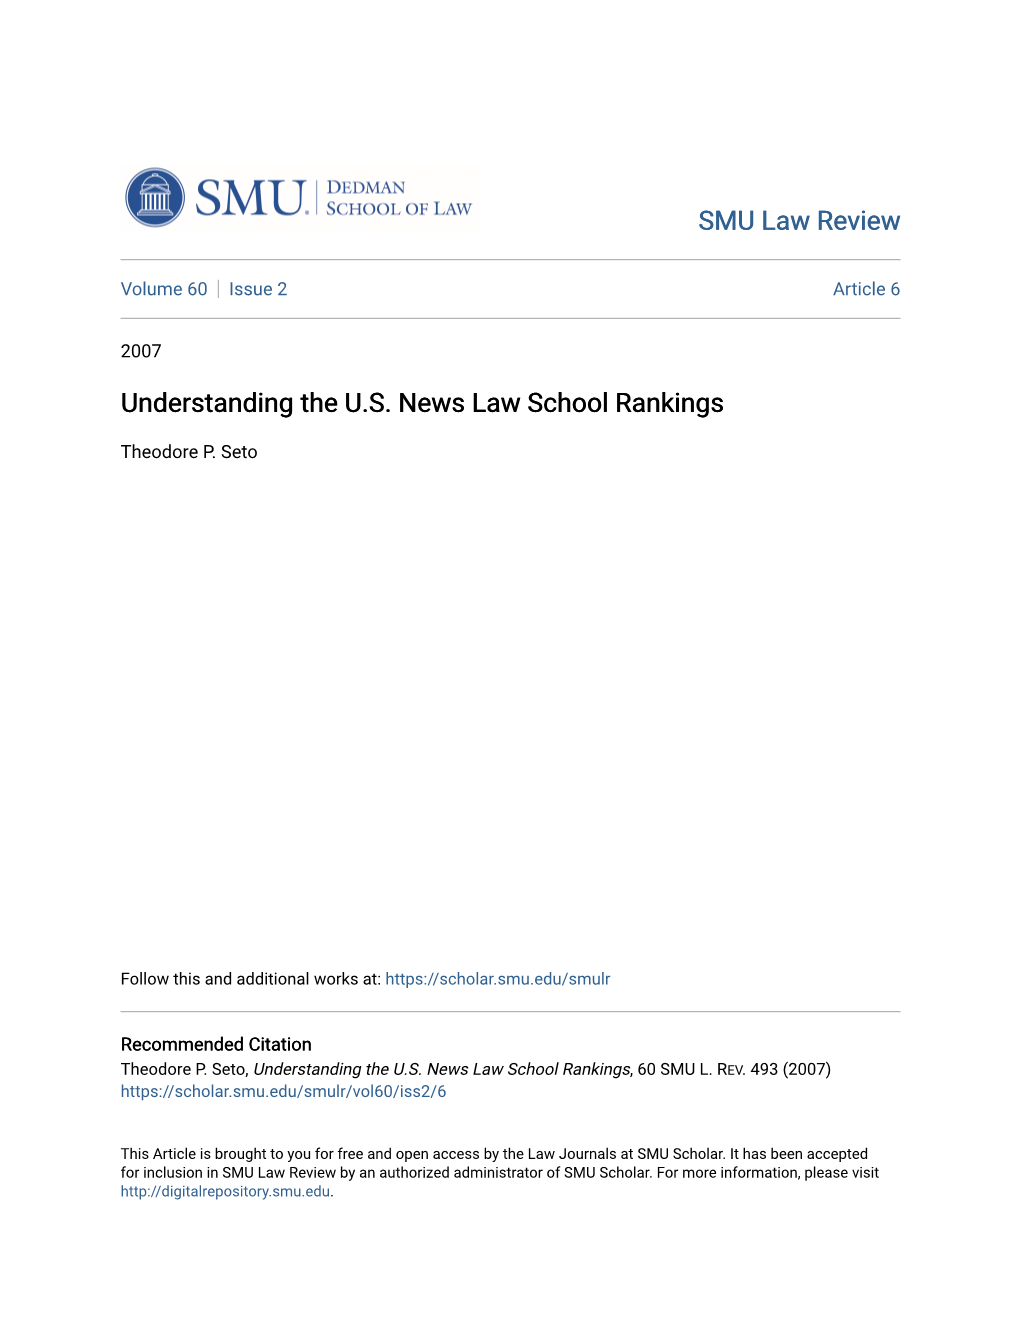 Understanding the U.S. News Law School Rankings